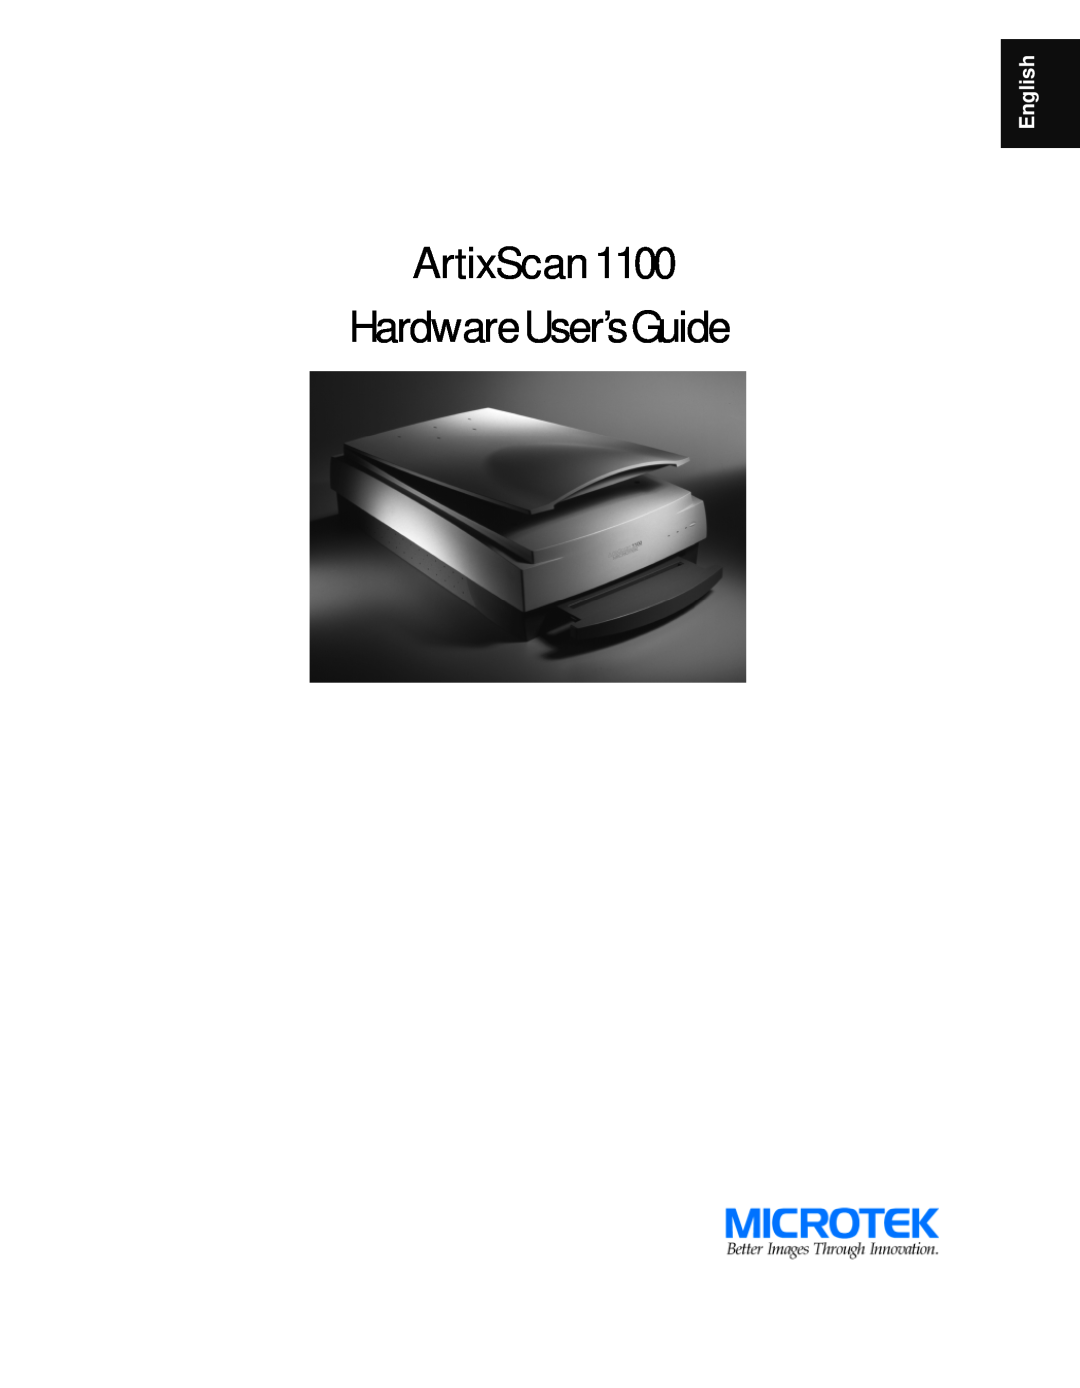 Microtek Artix Scan1100 manual ArtixScan HardwareUser’sGuide, English 